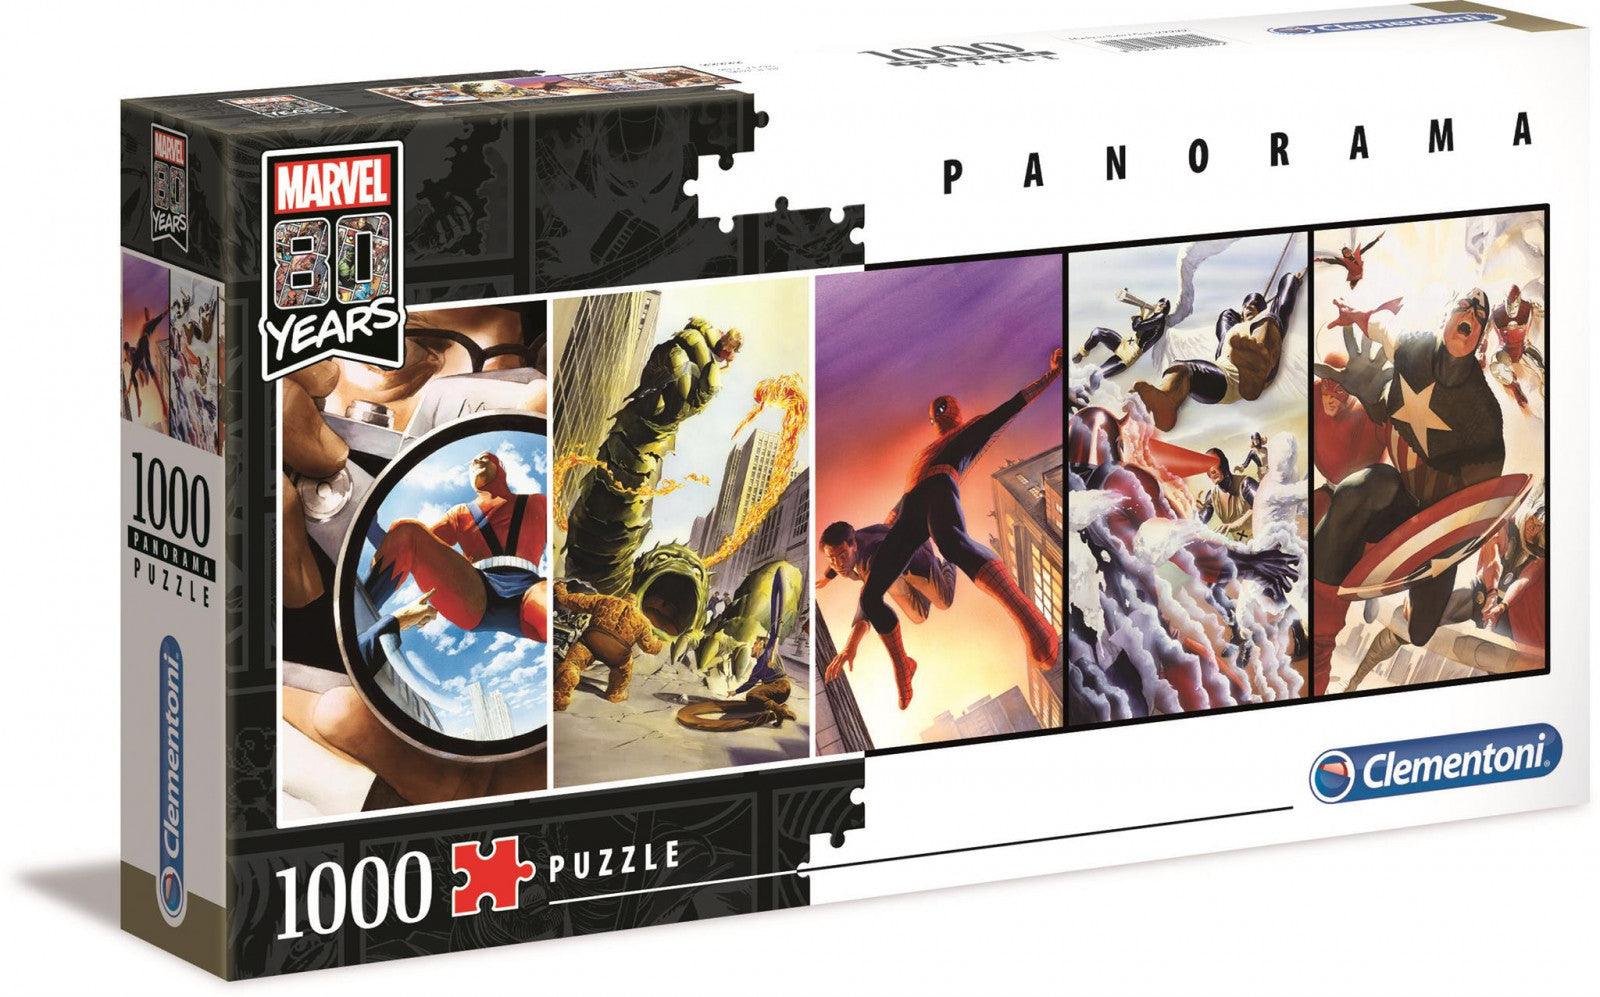 VR-80650 Clementoni Puzzle Marvel 80th Anniversary Panorama Puzzle 1,000 pieces - Clementoni - Titan Pop Culture